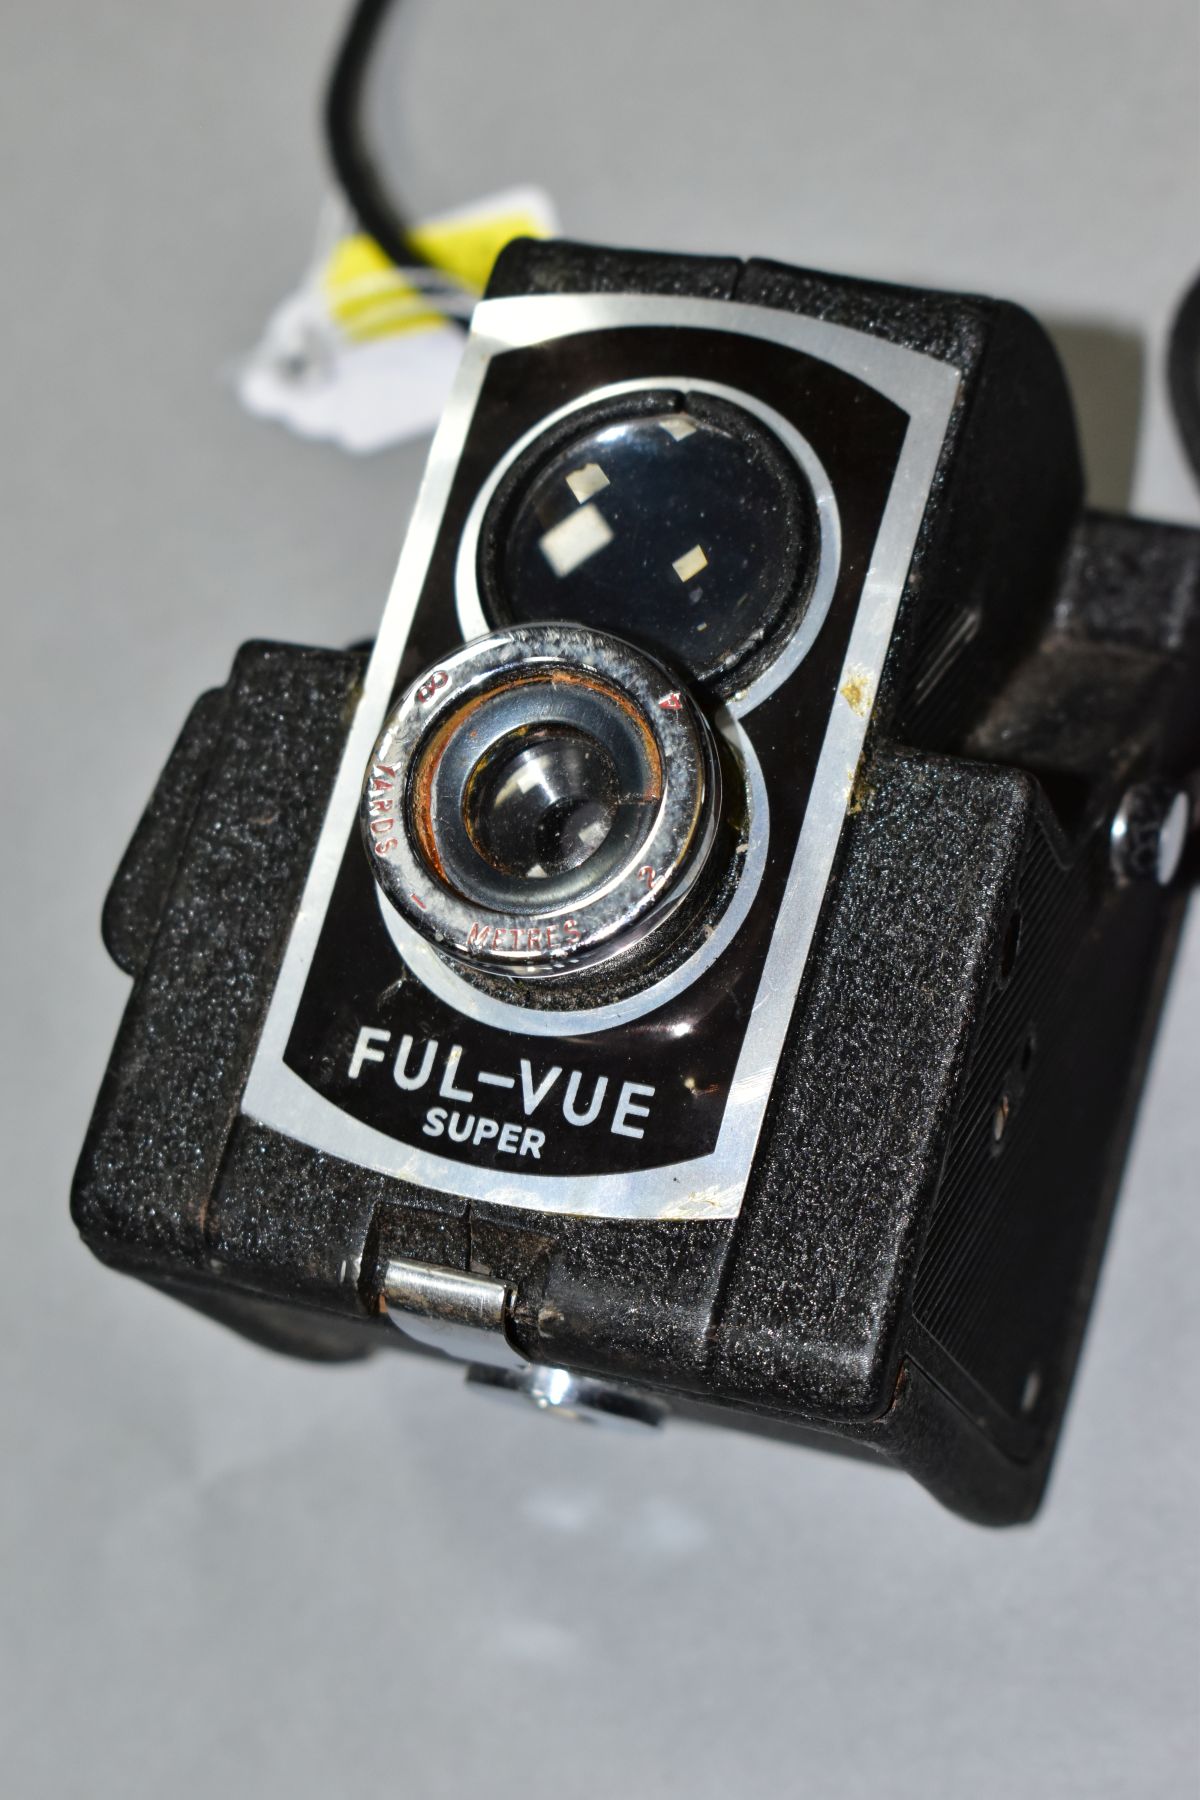 AN ENSIGN INSTANT POCKET FOLDING CAMERA, a Ross Ensign Ful-Vue Super and a Fujica 8EE Cine camera ( - Image 4 of 8